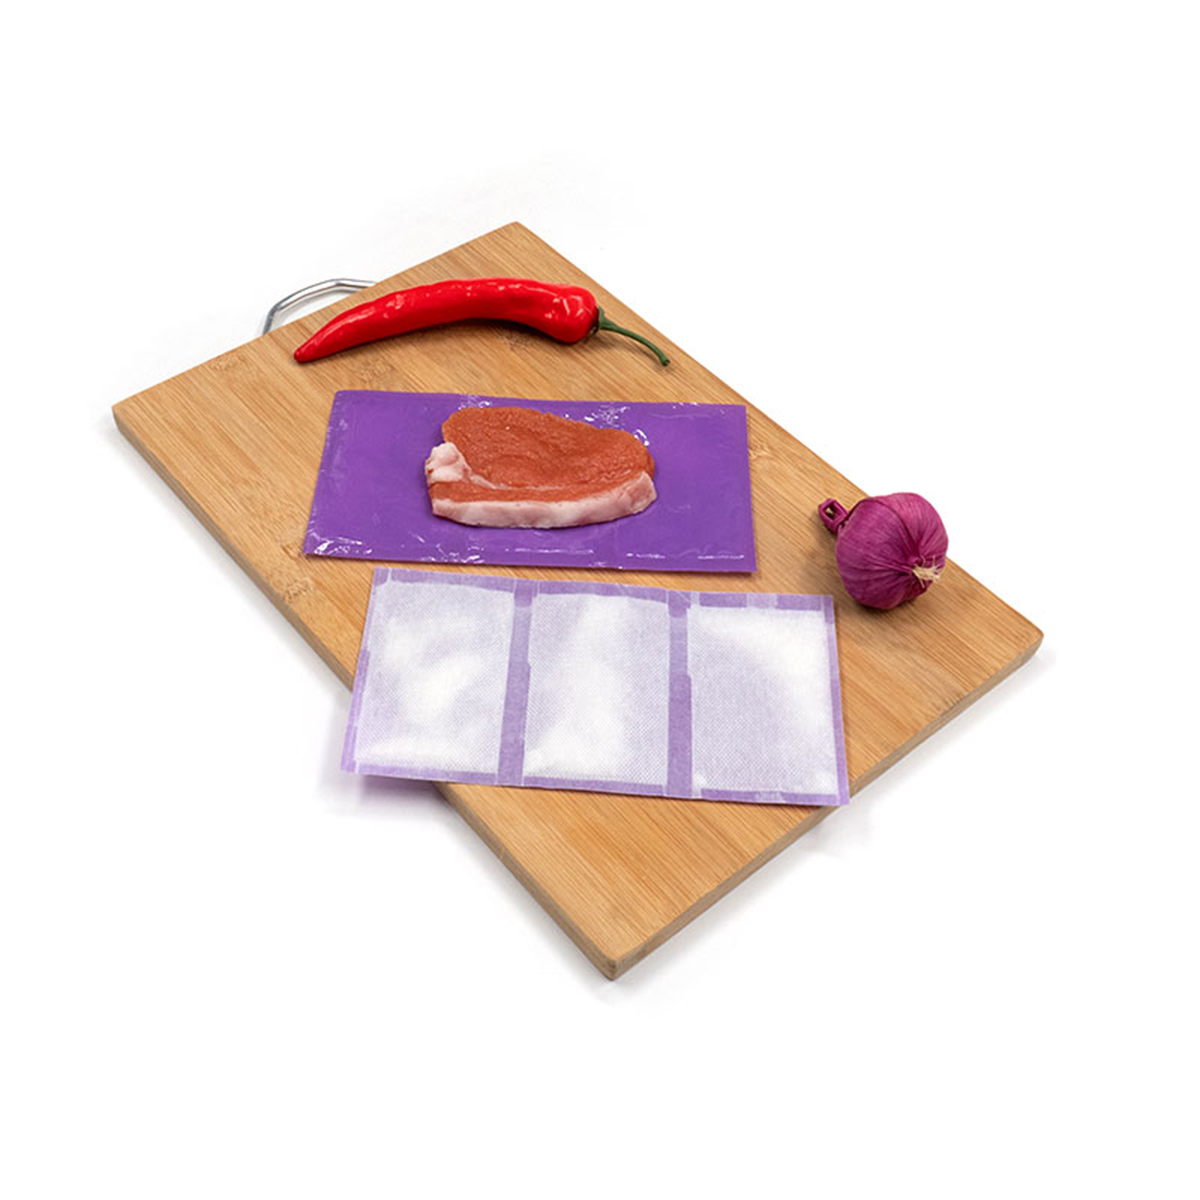 Hühnchen-Absorptionspads, Lebensmittel-Absorptionspad für Tablettverpackung